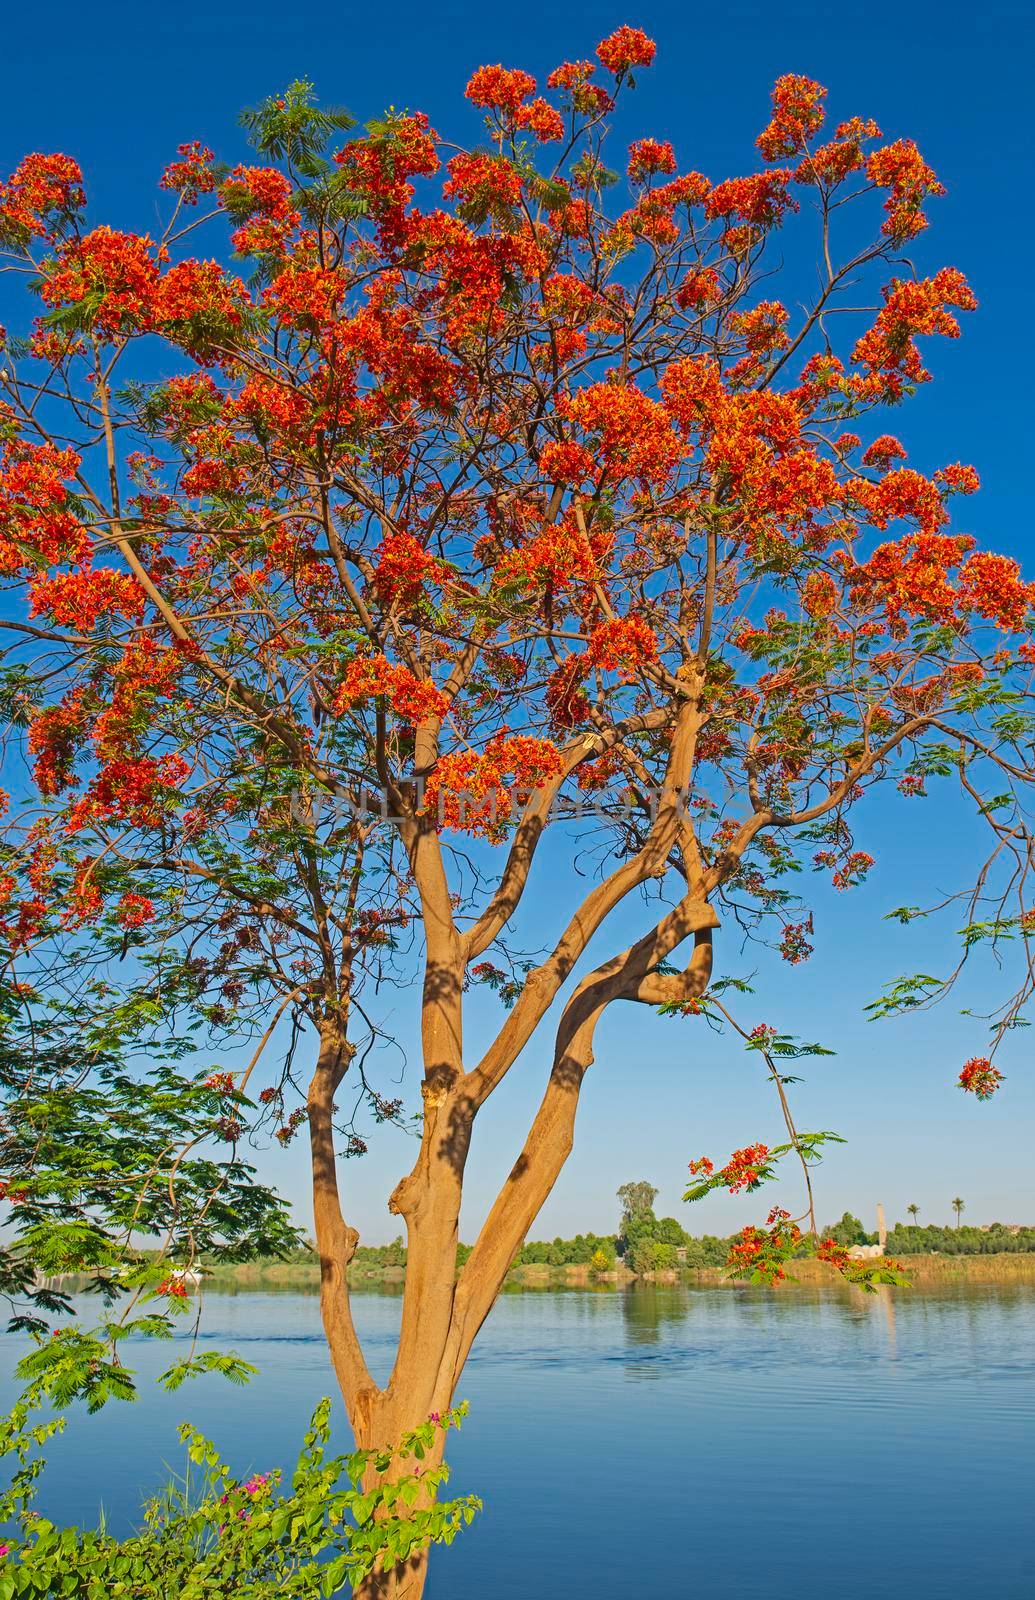 Orange carob tree ceratonia siliqua flowers against blue sky and large river background